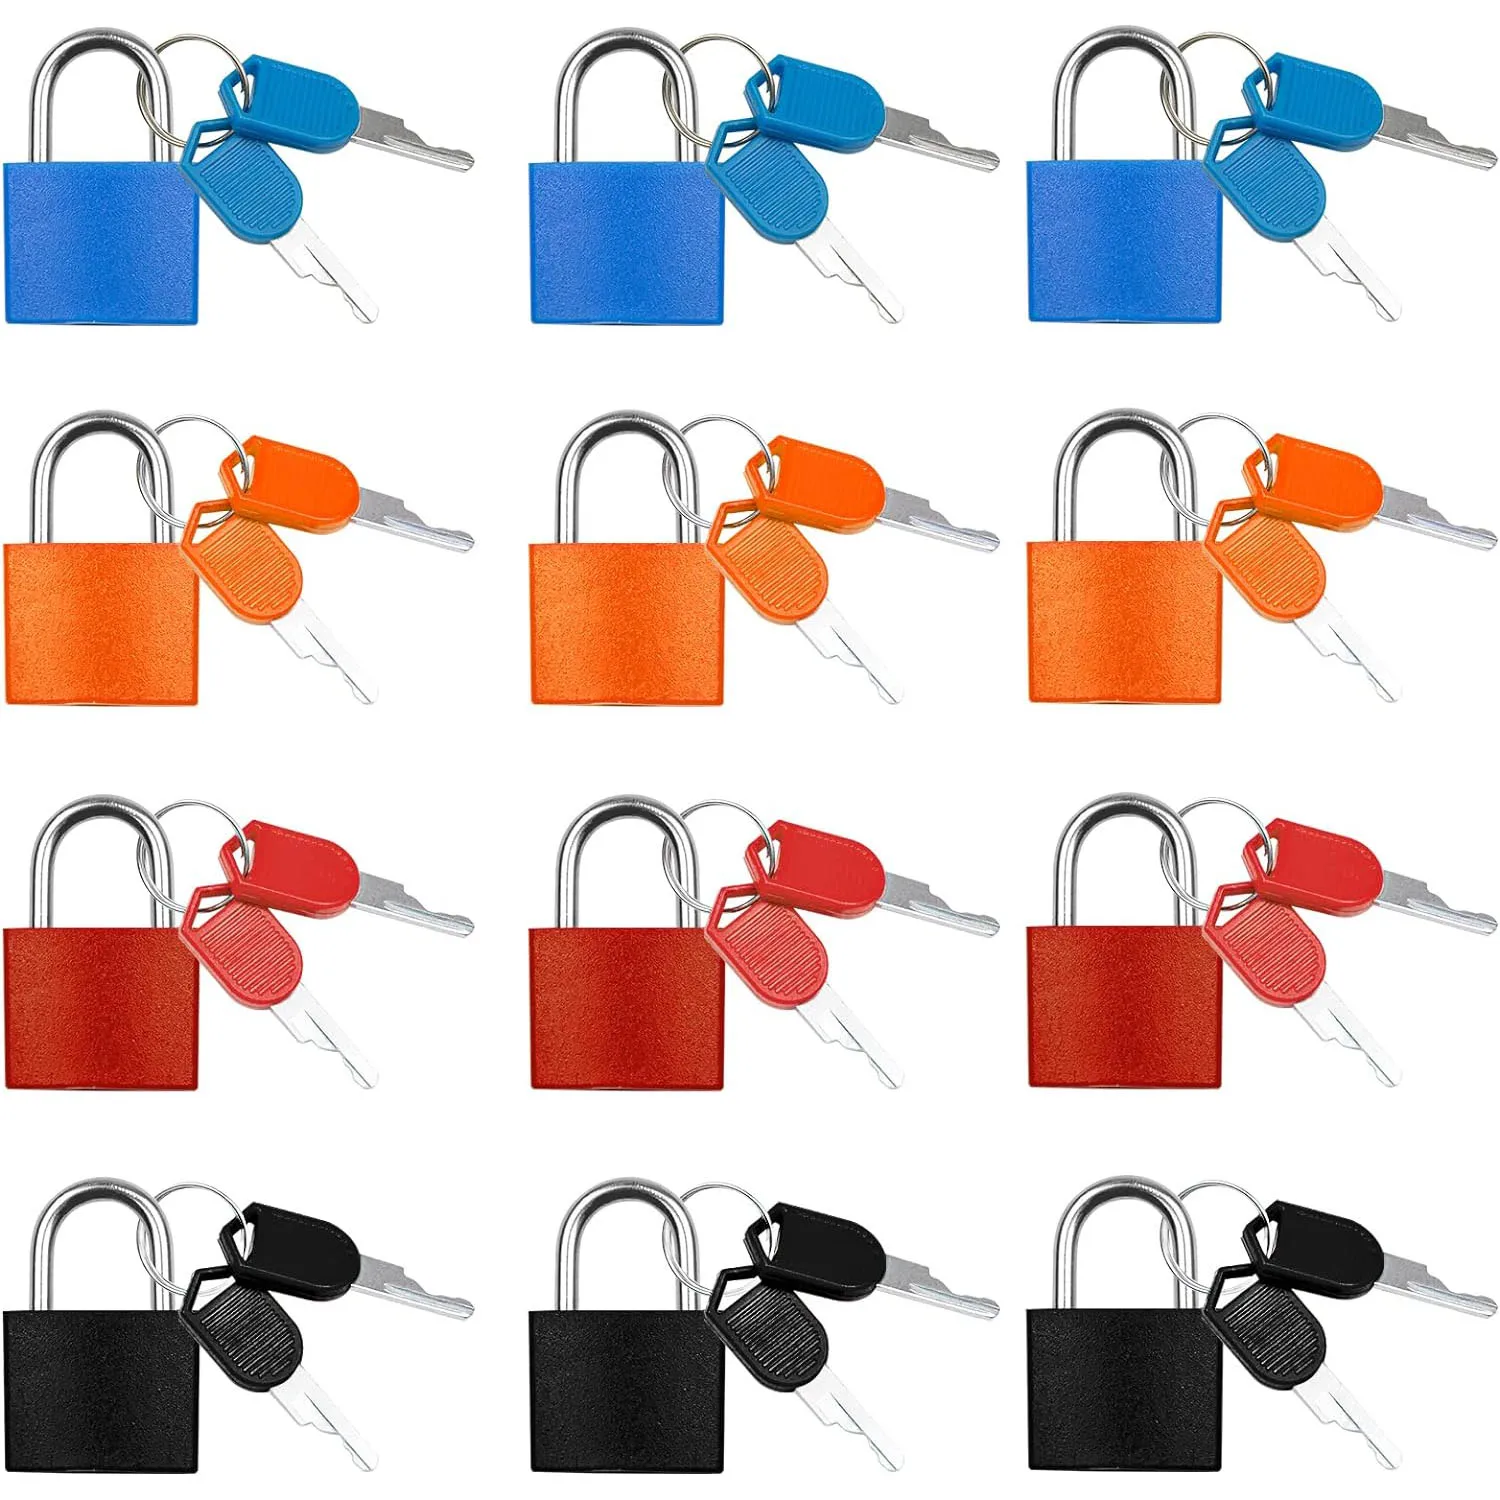 Suitcase Locks with Keys, Small Padlock with Key, Luggage Padlocks, Mini Keyed Padlock for Travel Bags, School Gym Locker клавиатура logitech mx keys mini grey bluetooth радио